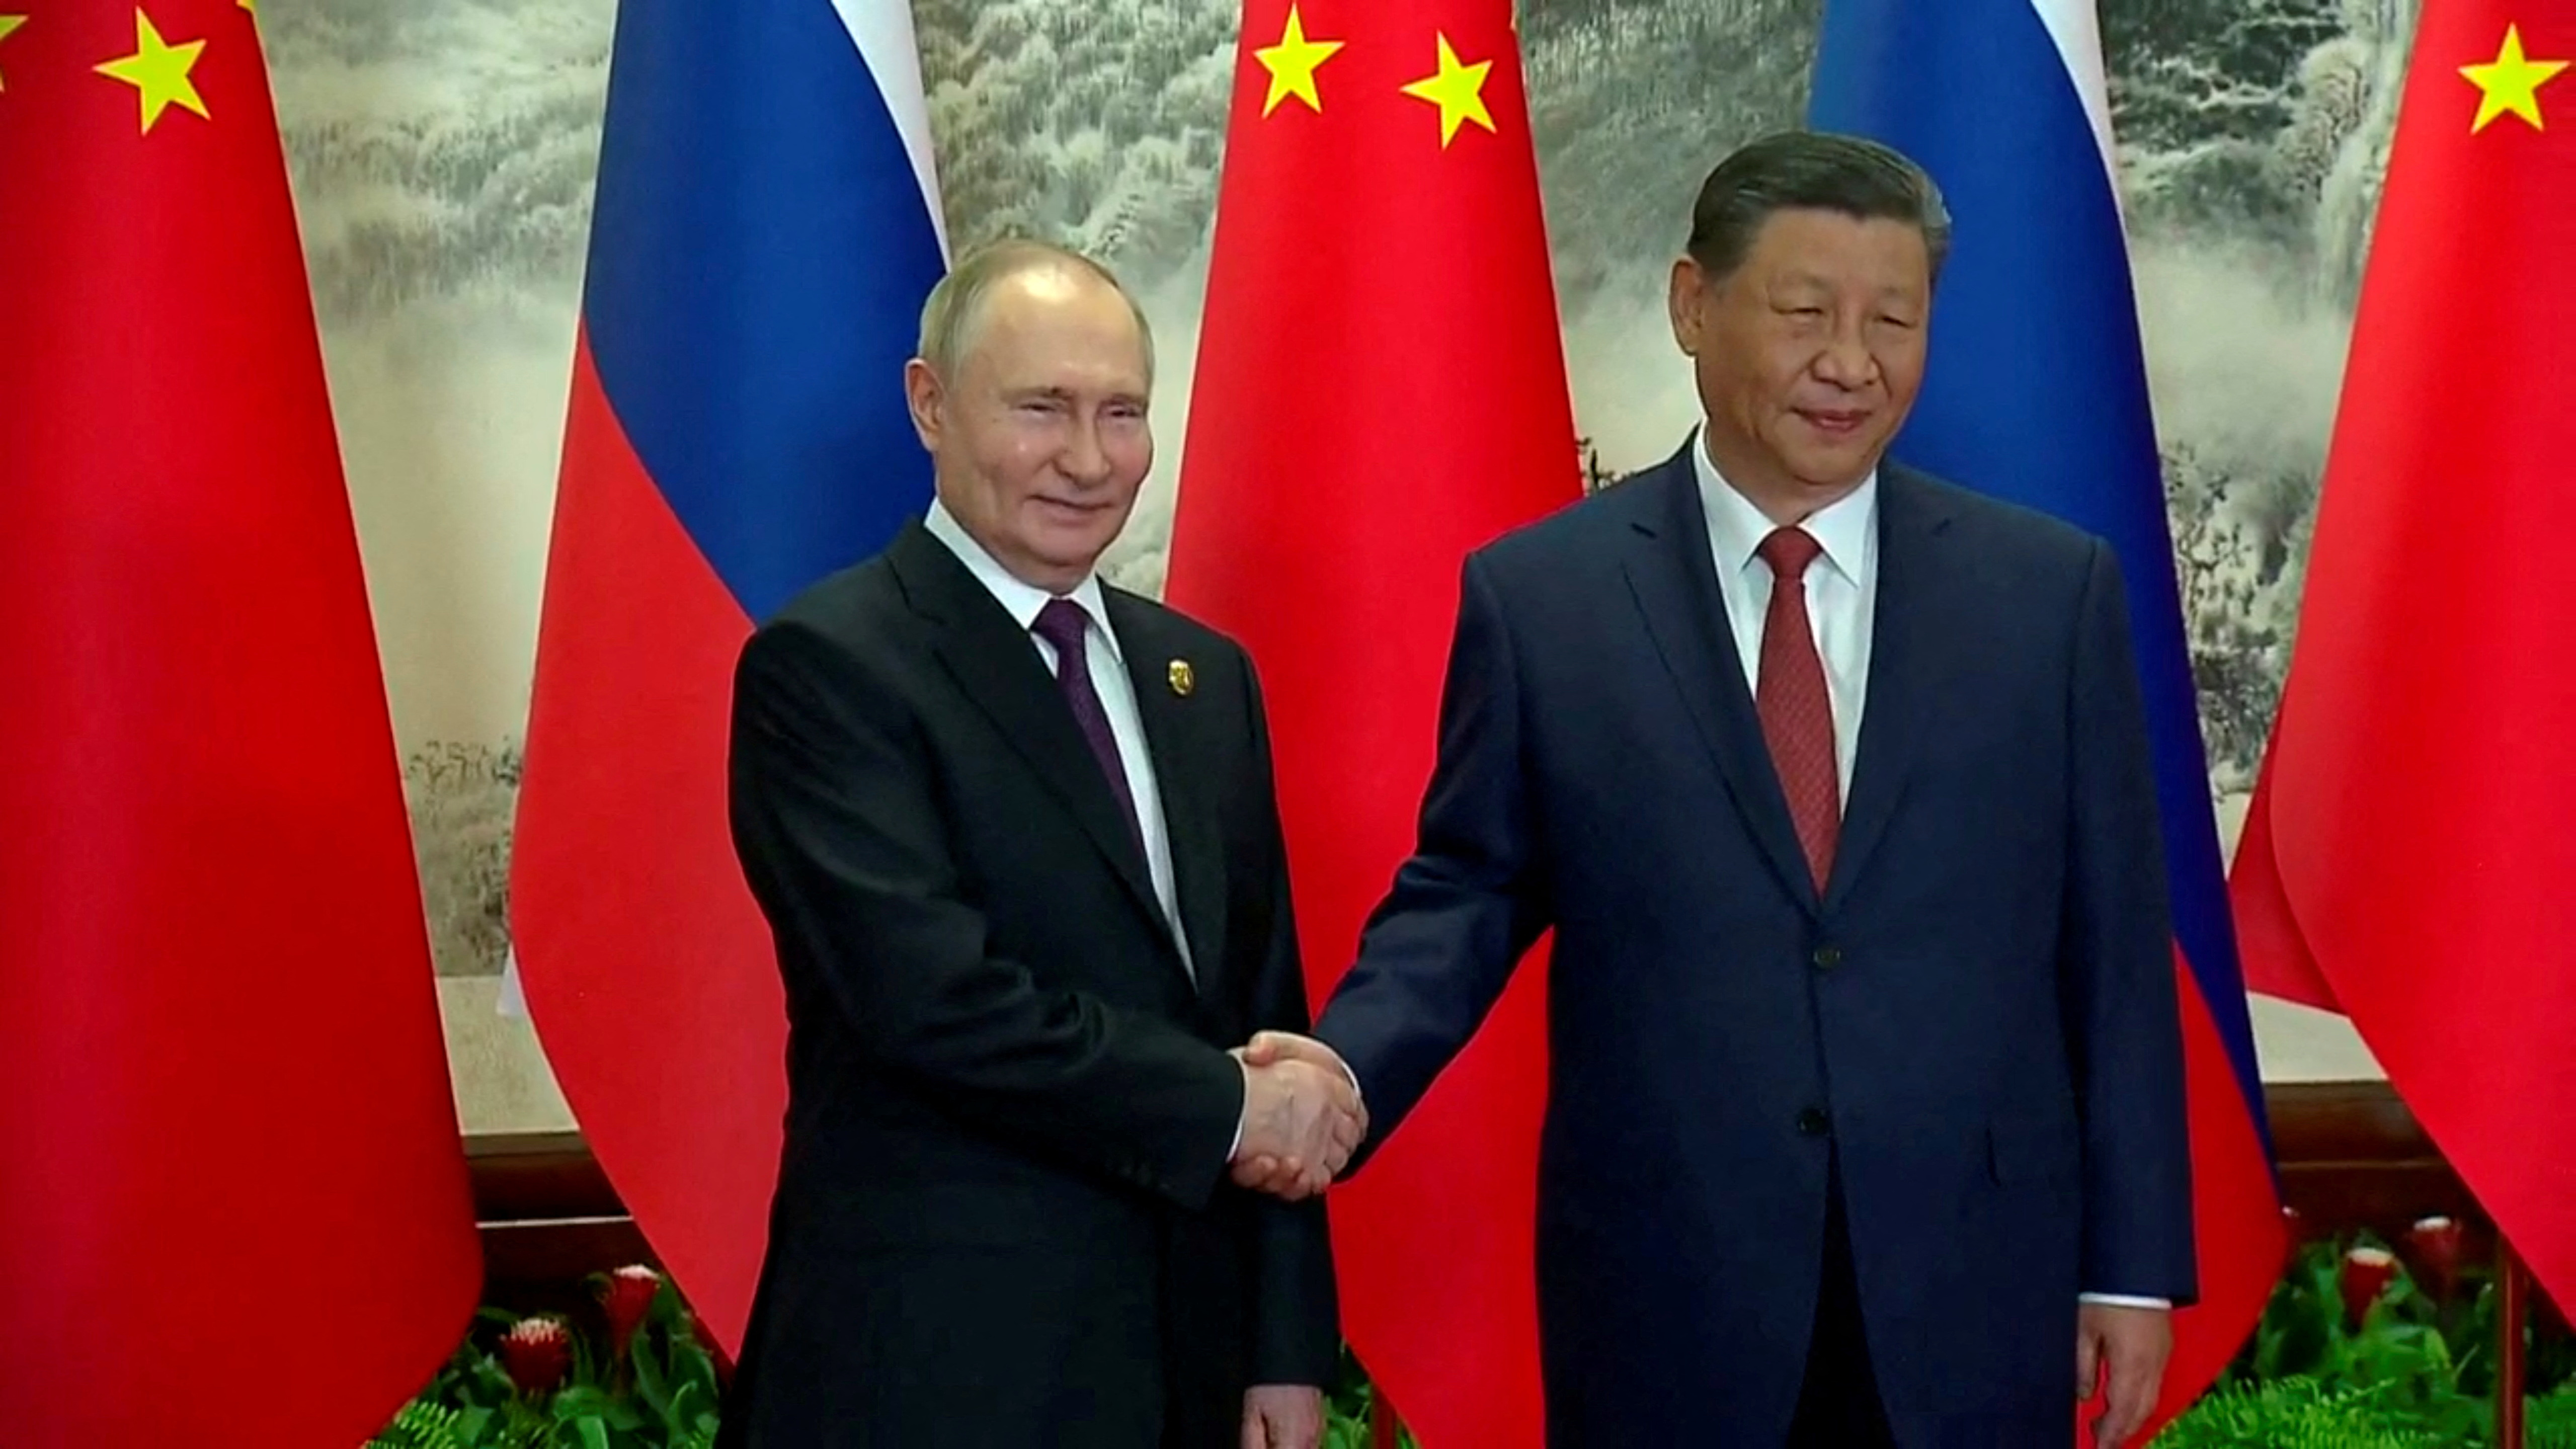 Russian President Vladimir Putin and Chinese President Xi Jinping meet in Beijing